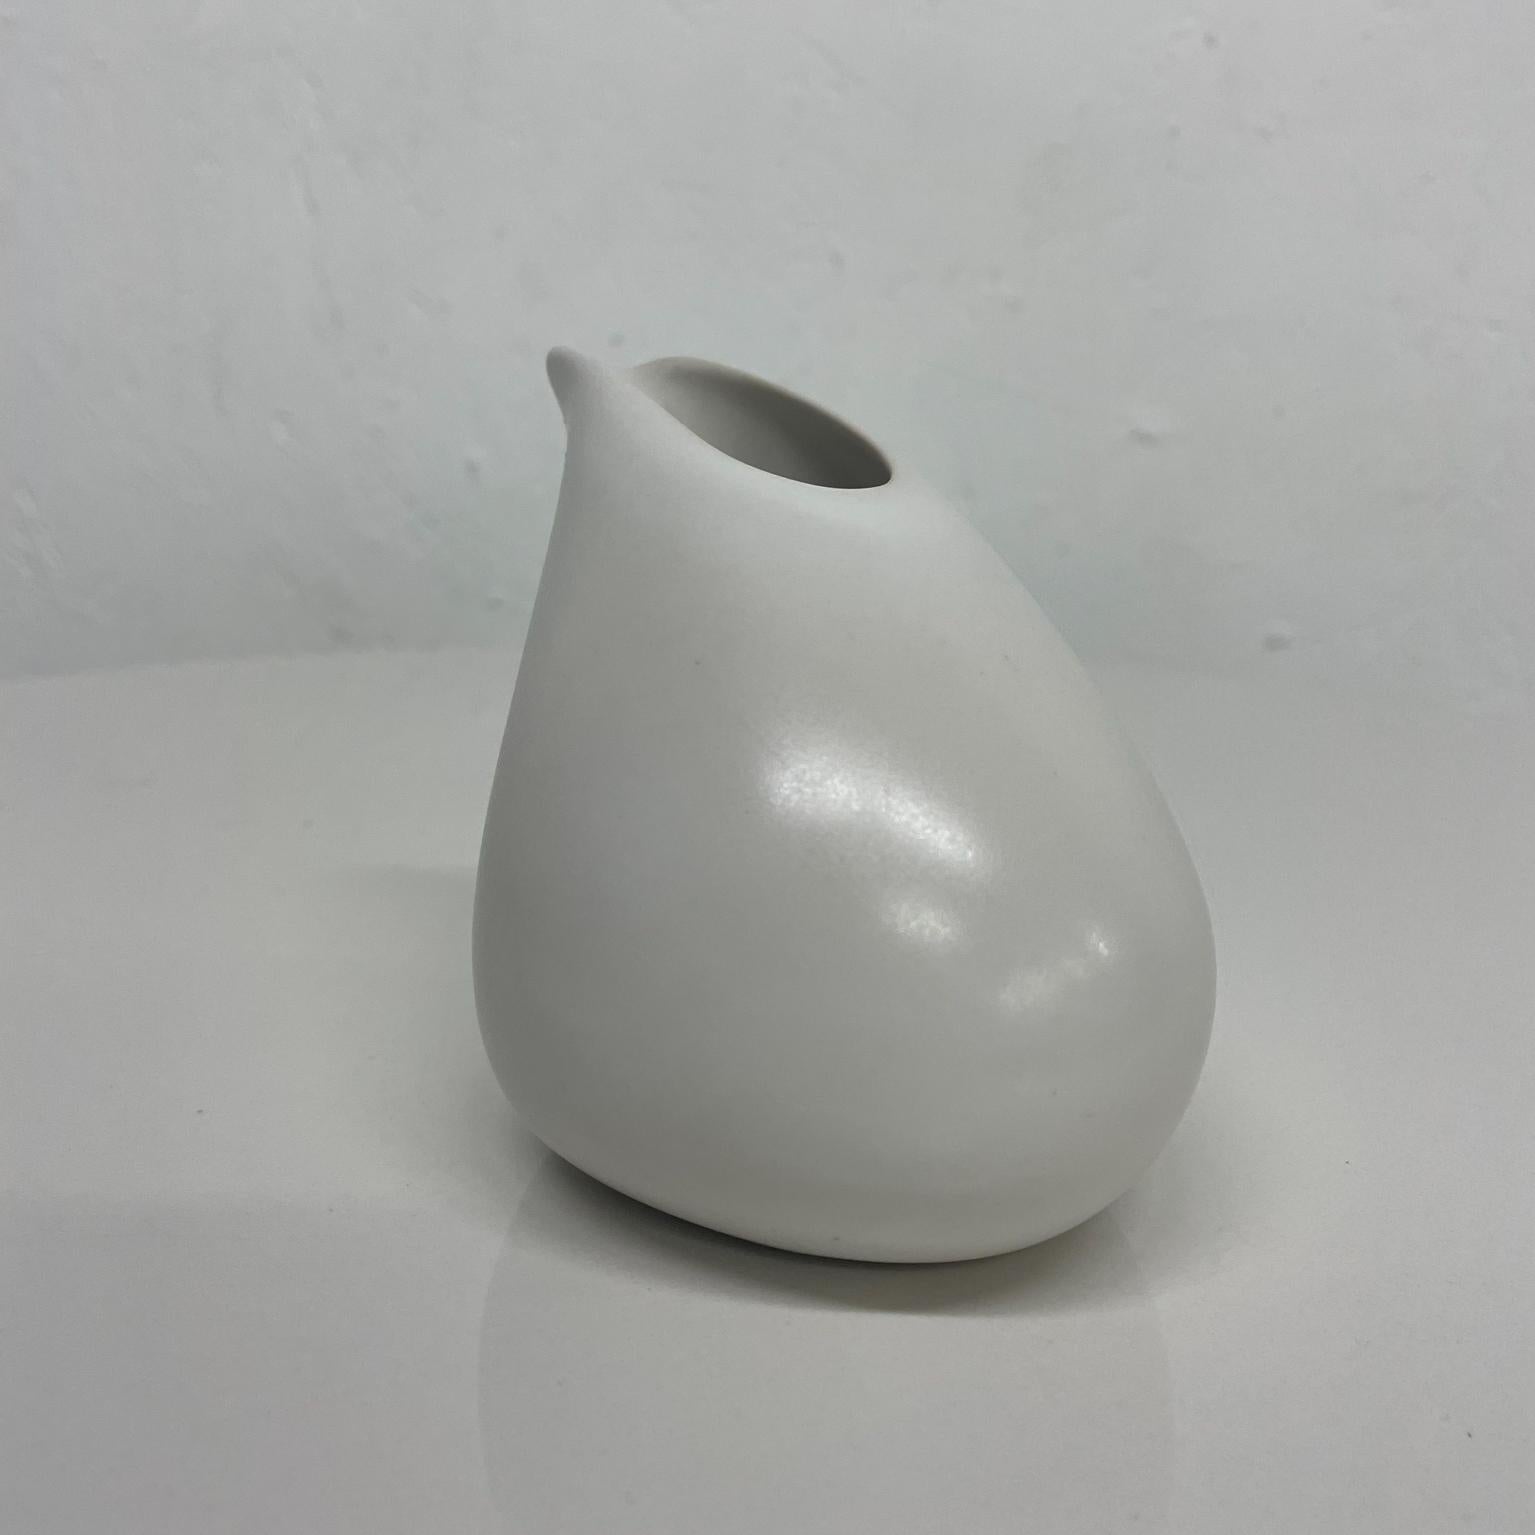 American Midcentury Modern Studio Pottery Sculptural Pearl Creamer Signed Art 1970s